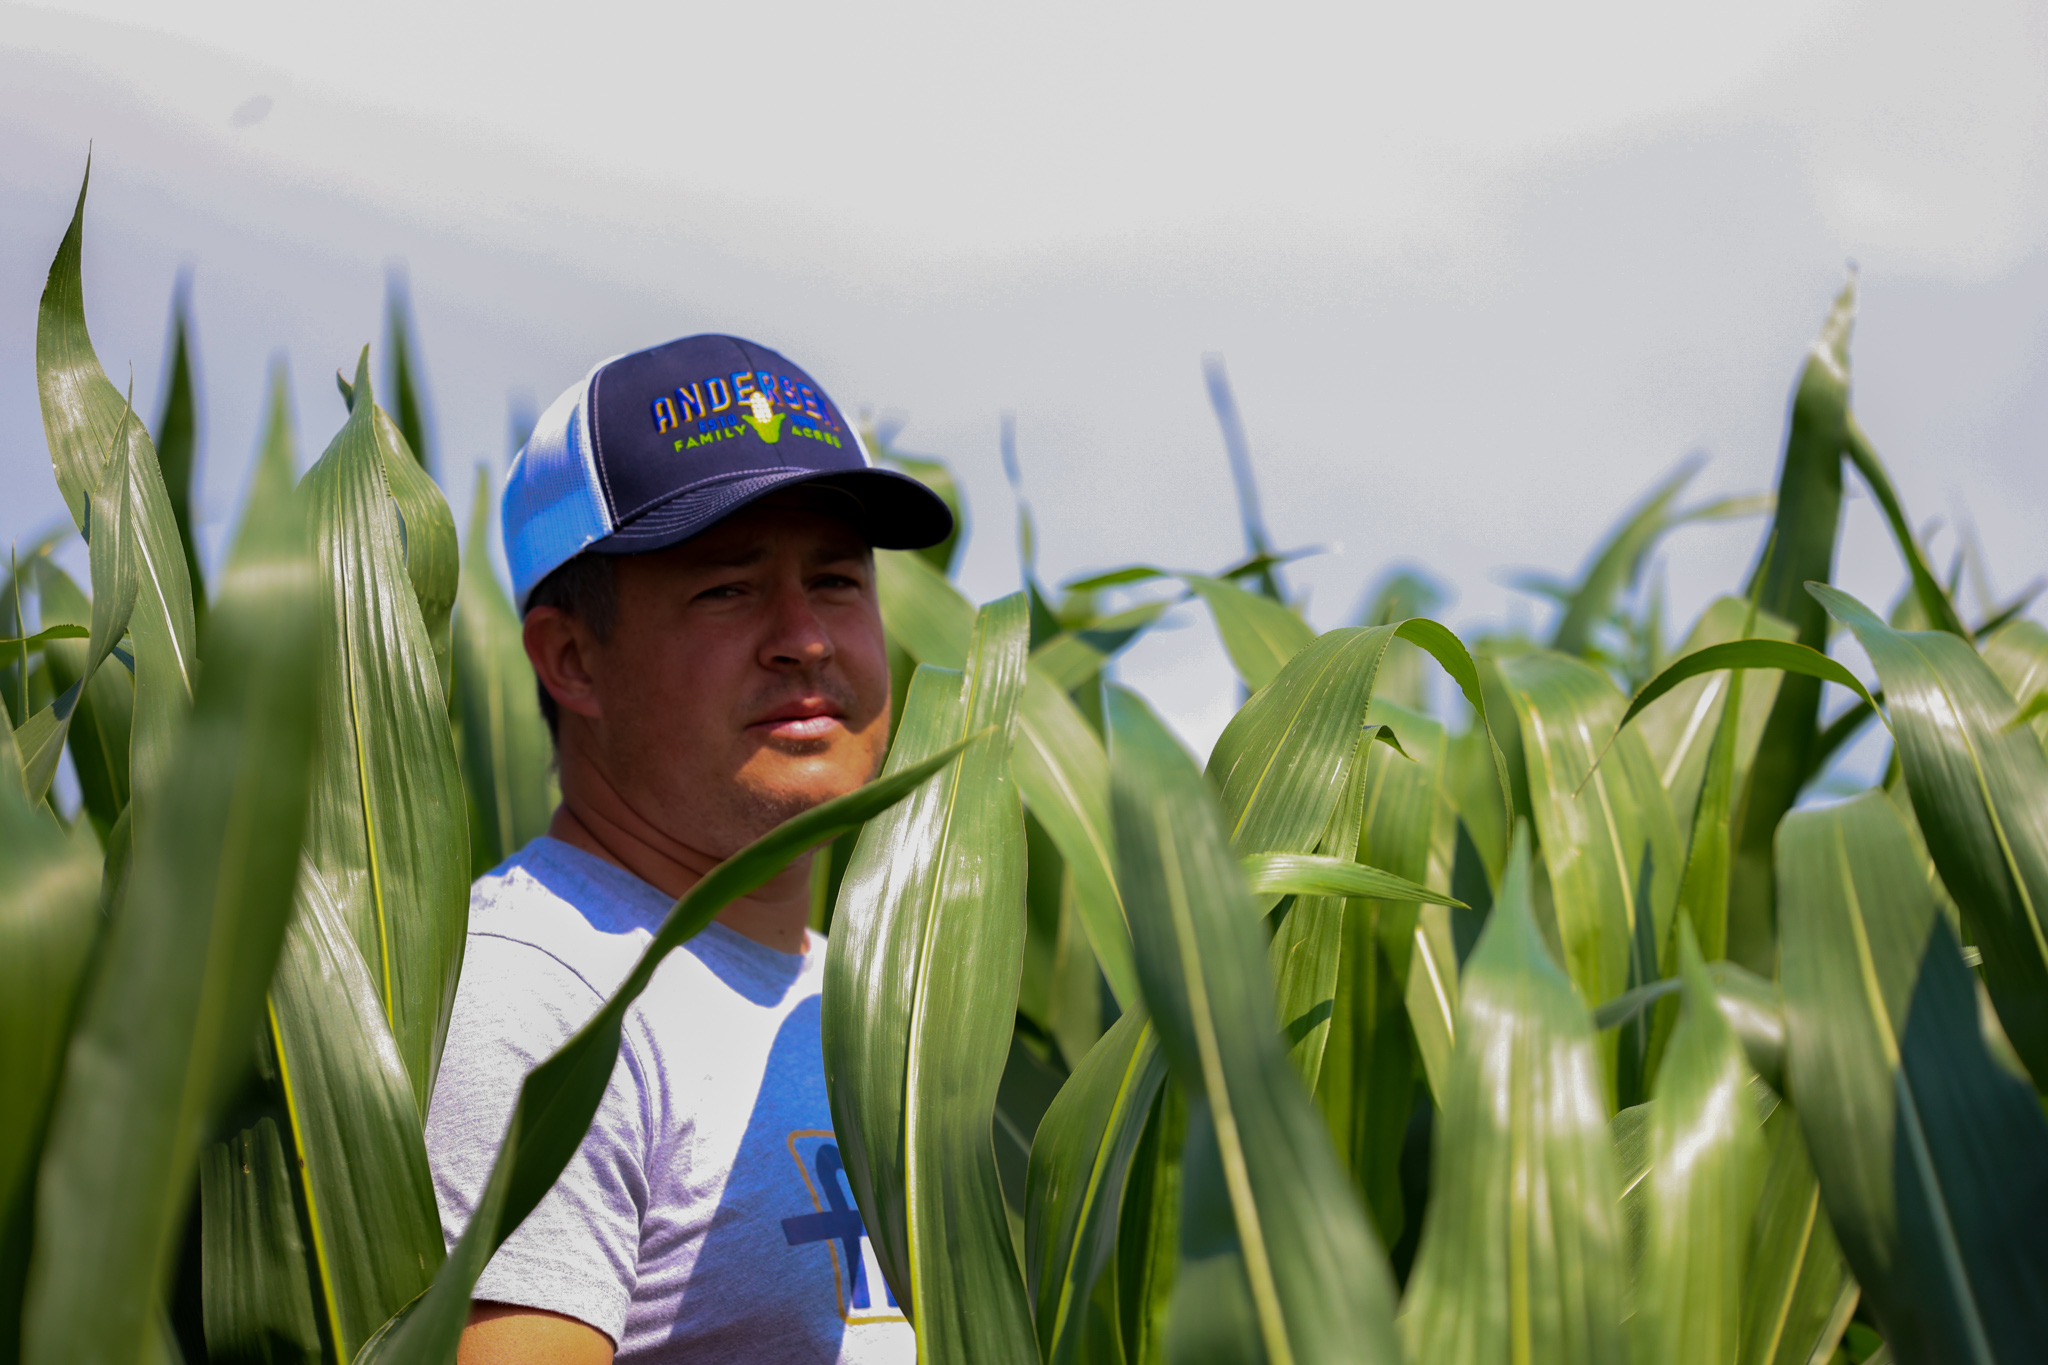 Iowa Corn Faces of Farming